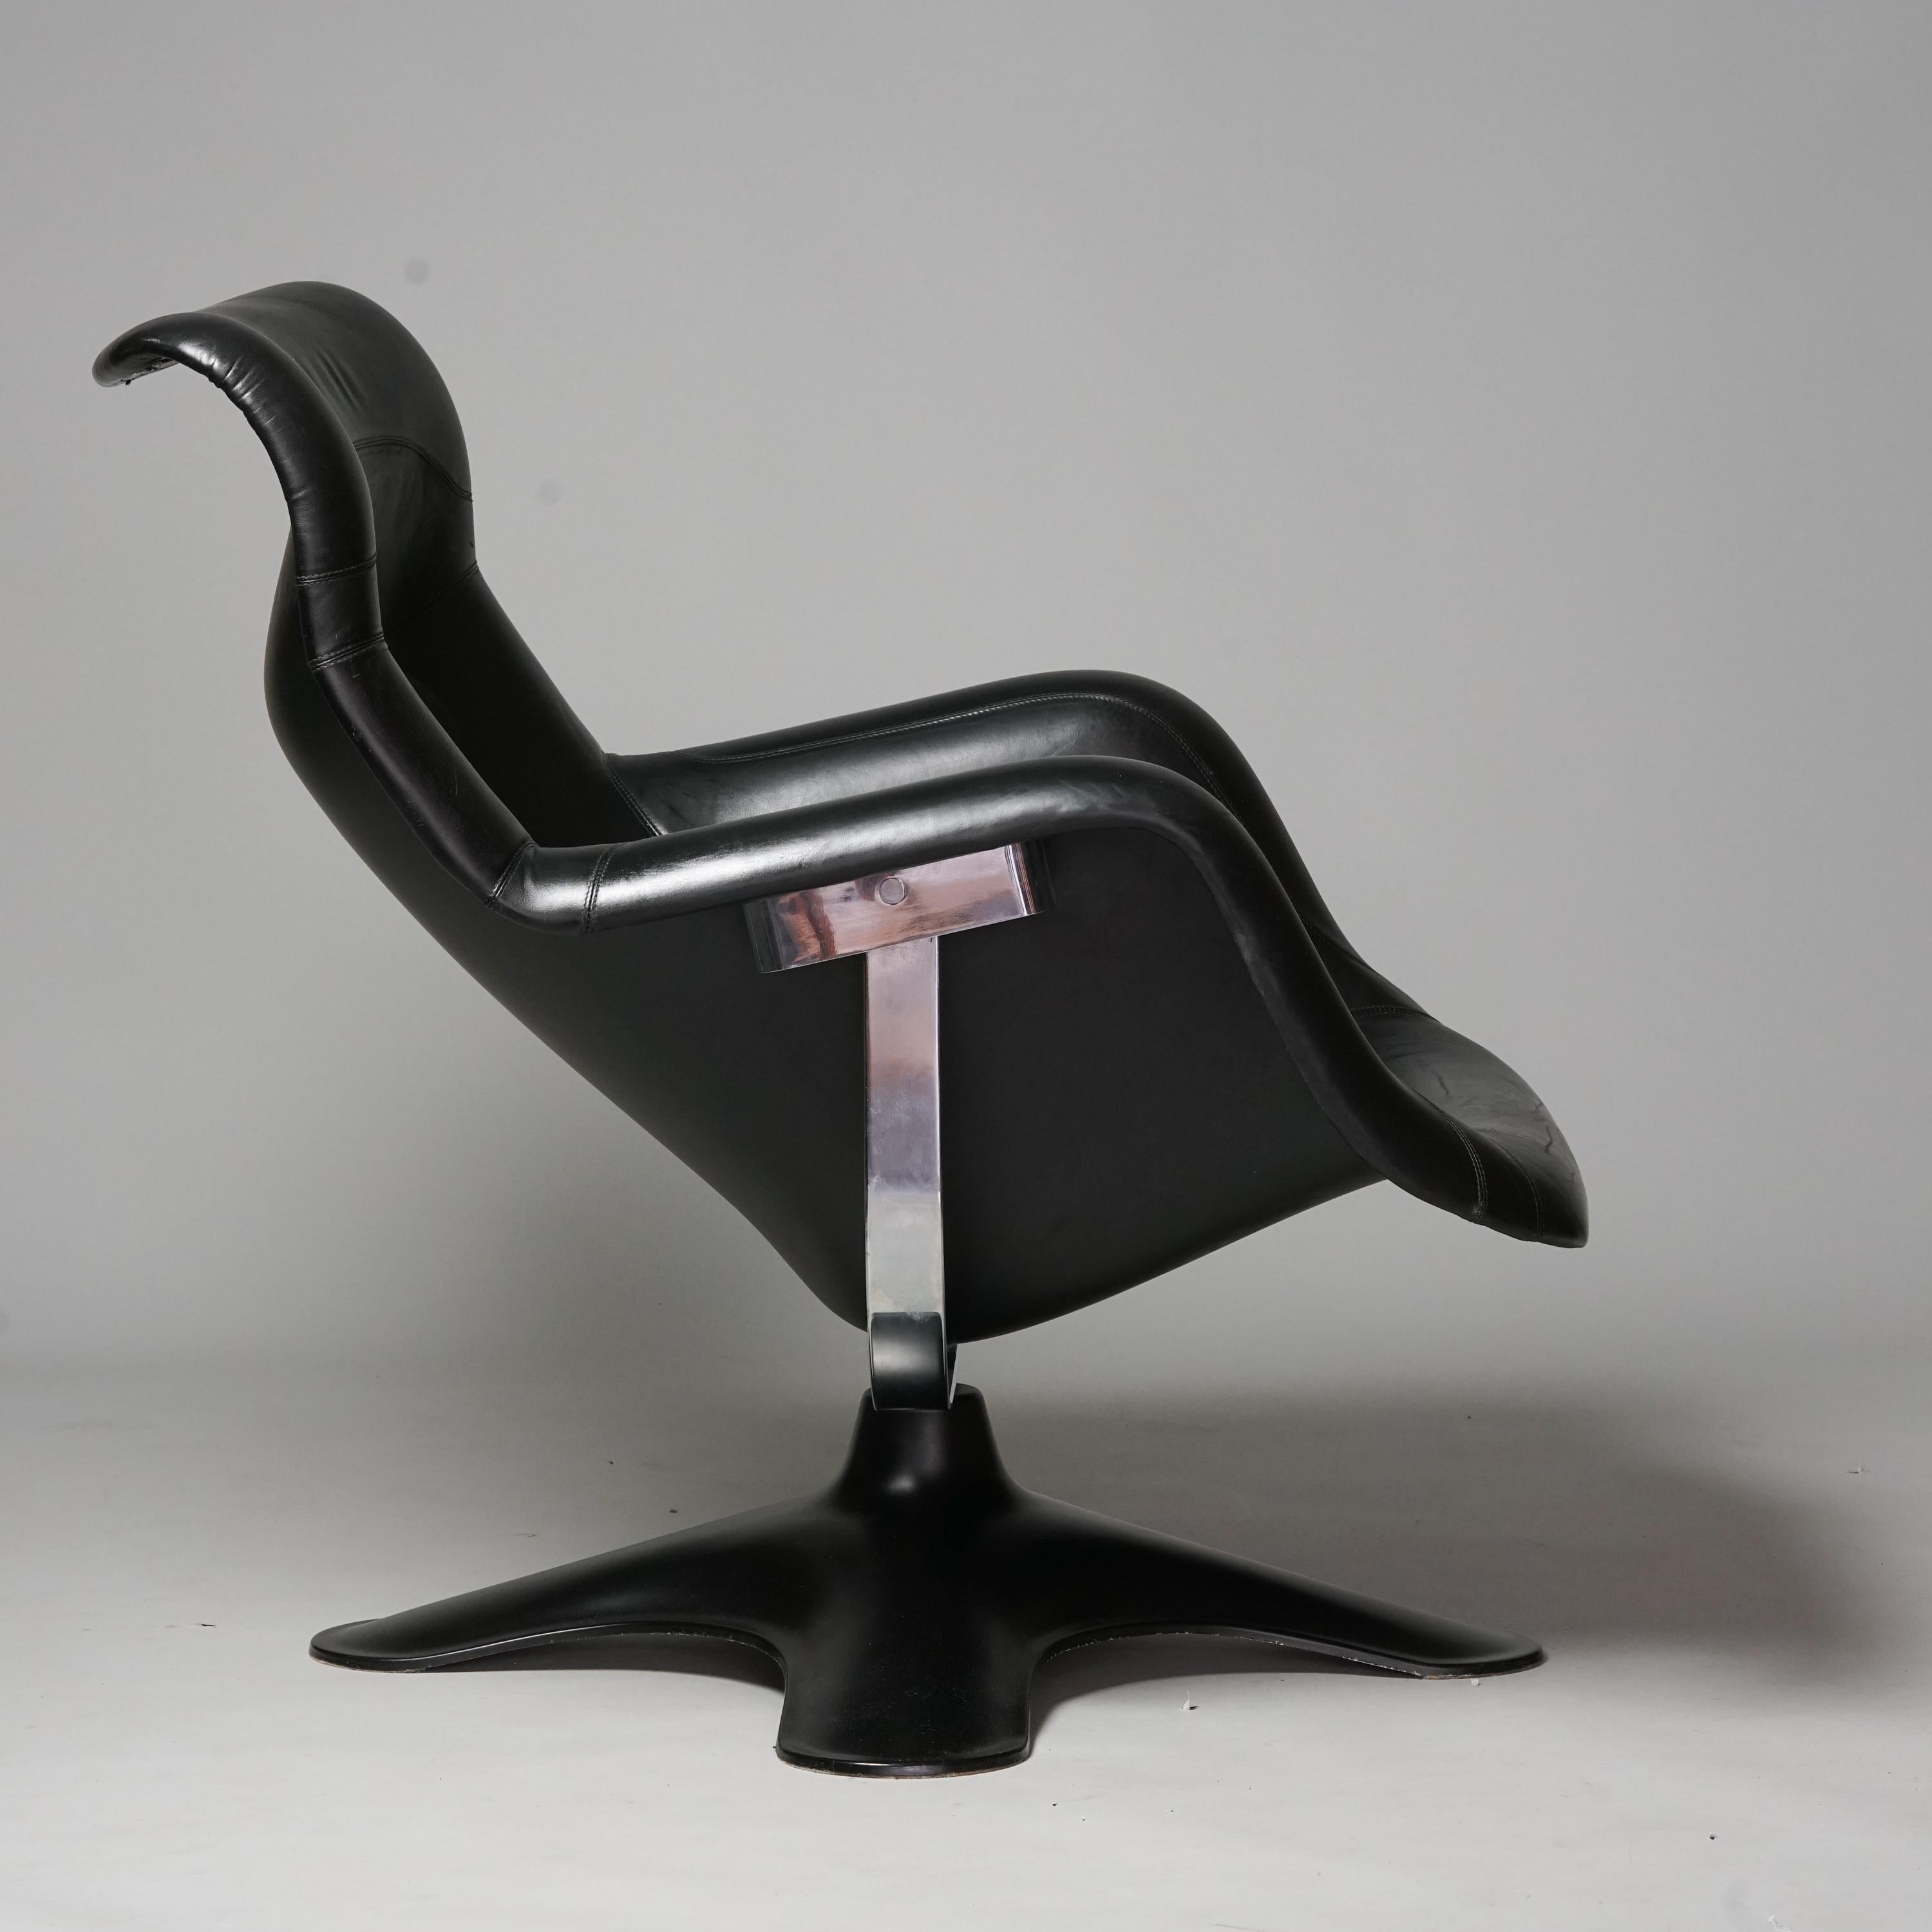 Modell Karuselli/ Karussell-Sessel, Yrjö Kukkapuro, Haimi Oy, 1970er Jahre (Skandinavische Moderne) im Angebot